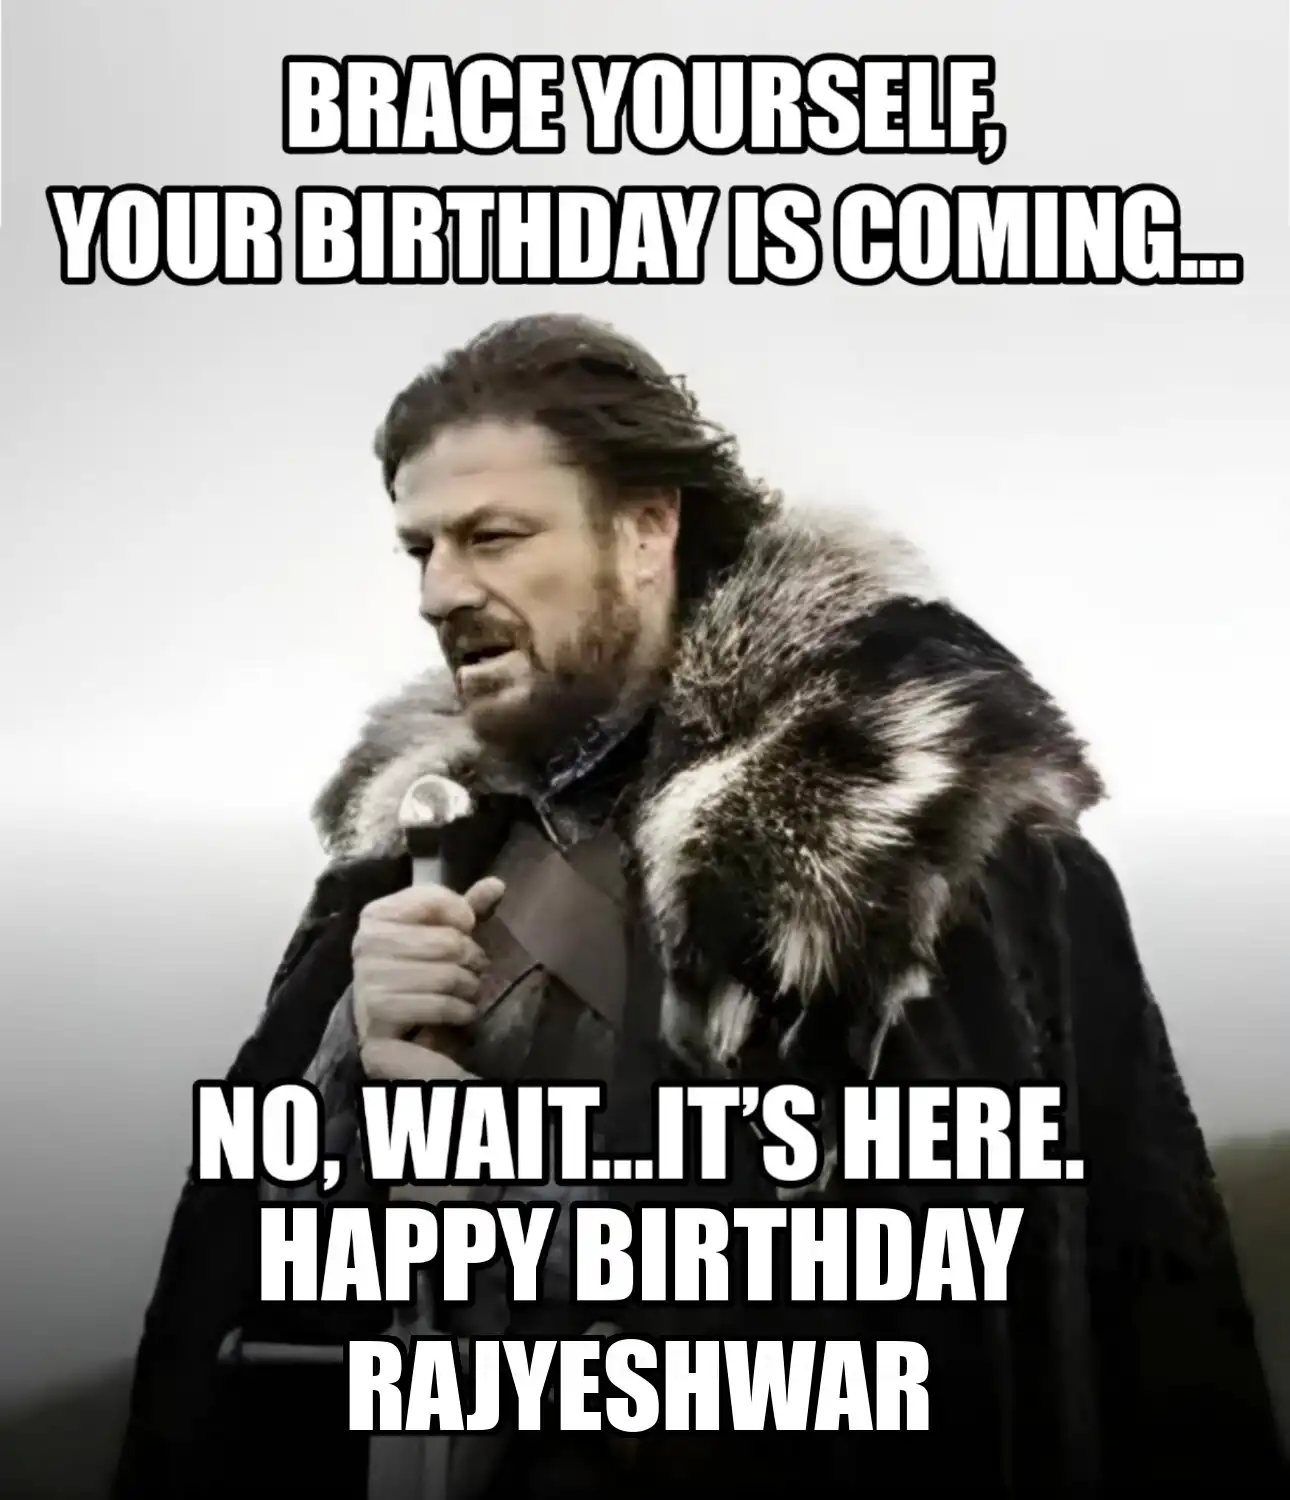 Happy Birthday Rajyeshwar Brace Yourself Your Birthday Is Coming Meme